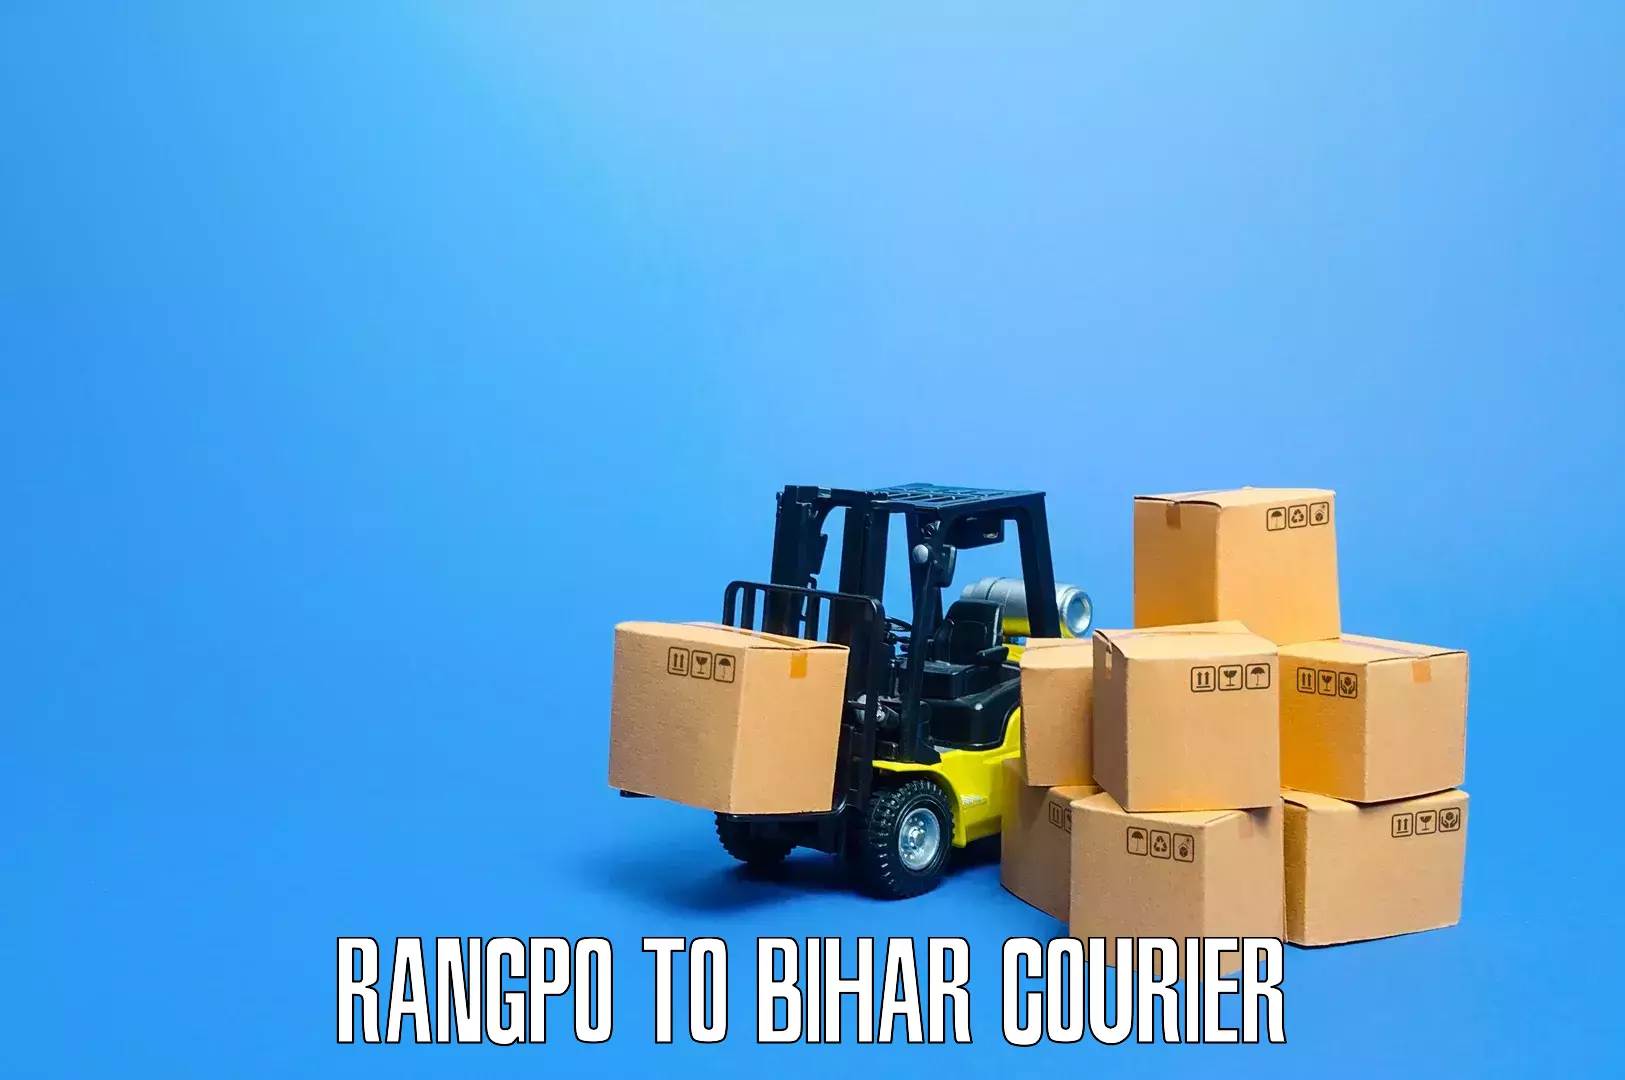 Hassle-free relocation Rangpo to Bihar